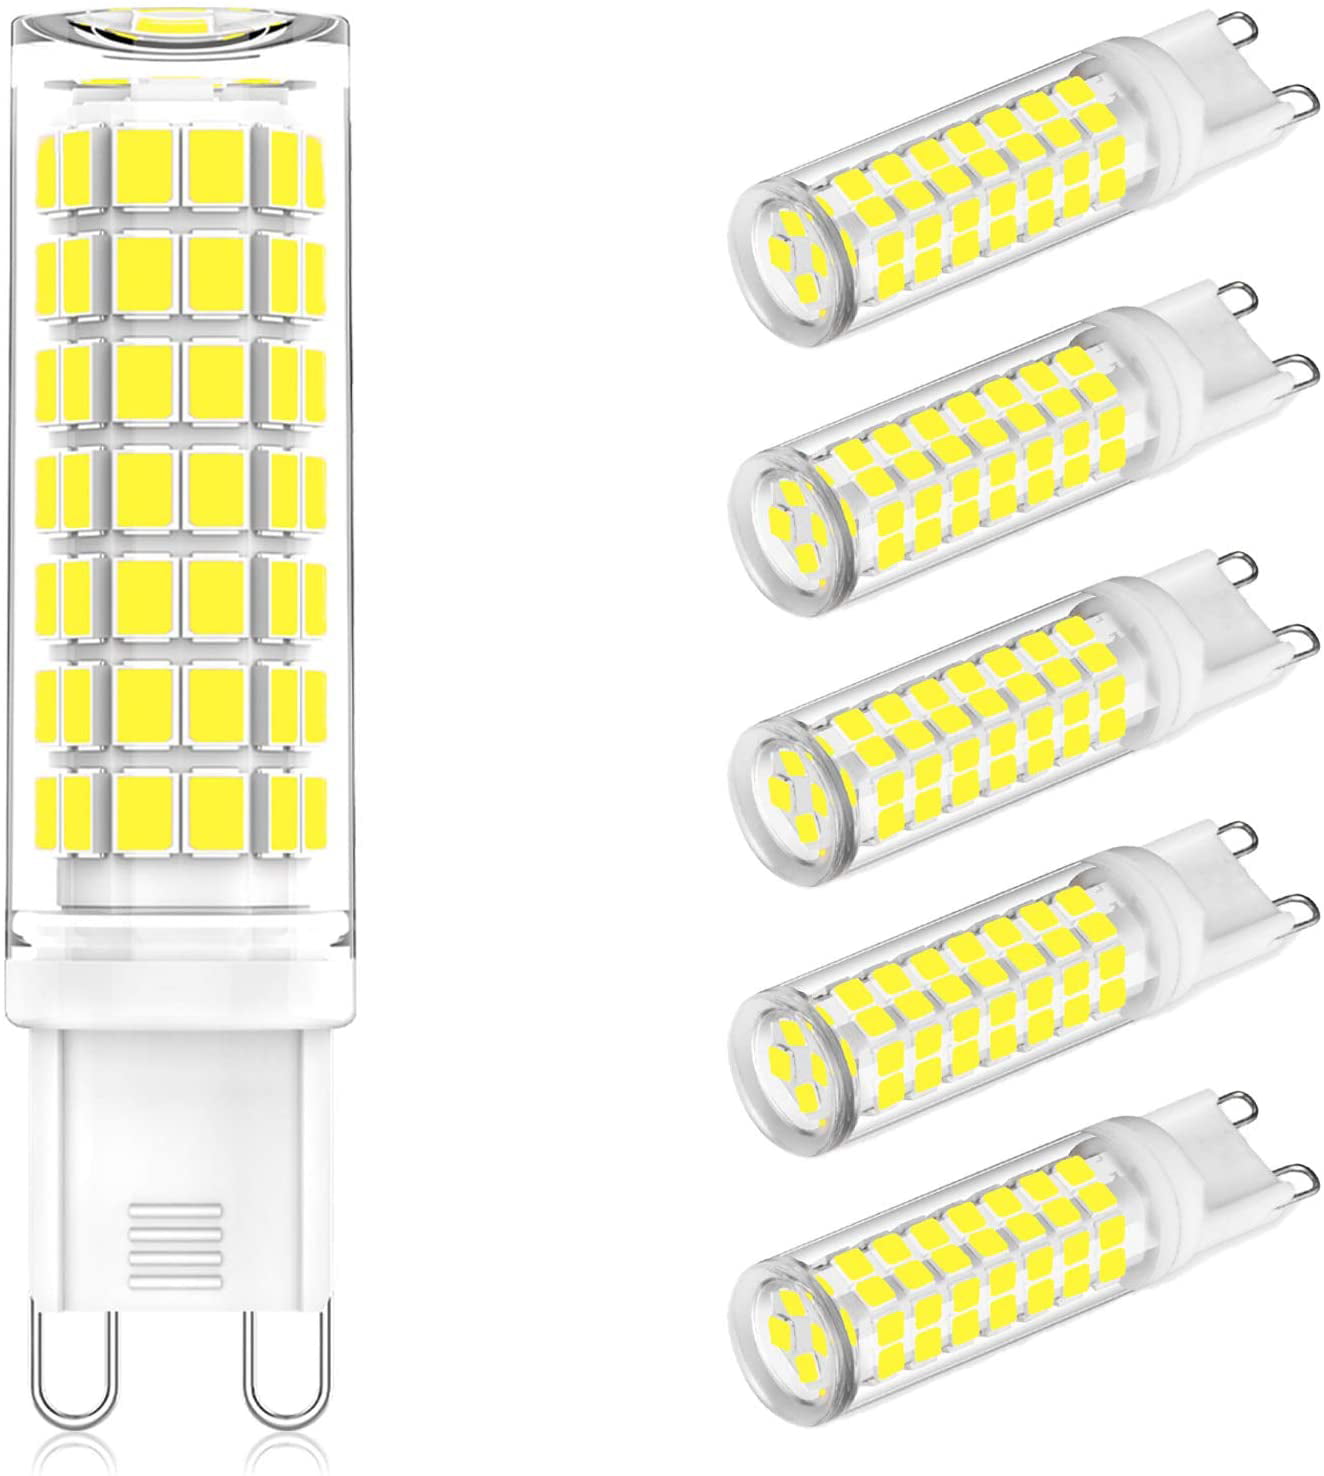 Szulight Dimmable led G9 Light Bulbs 6000K Daylight White 6000k 